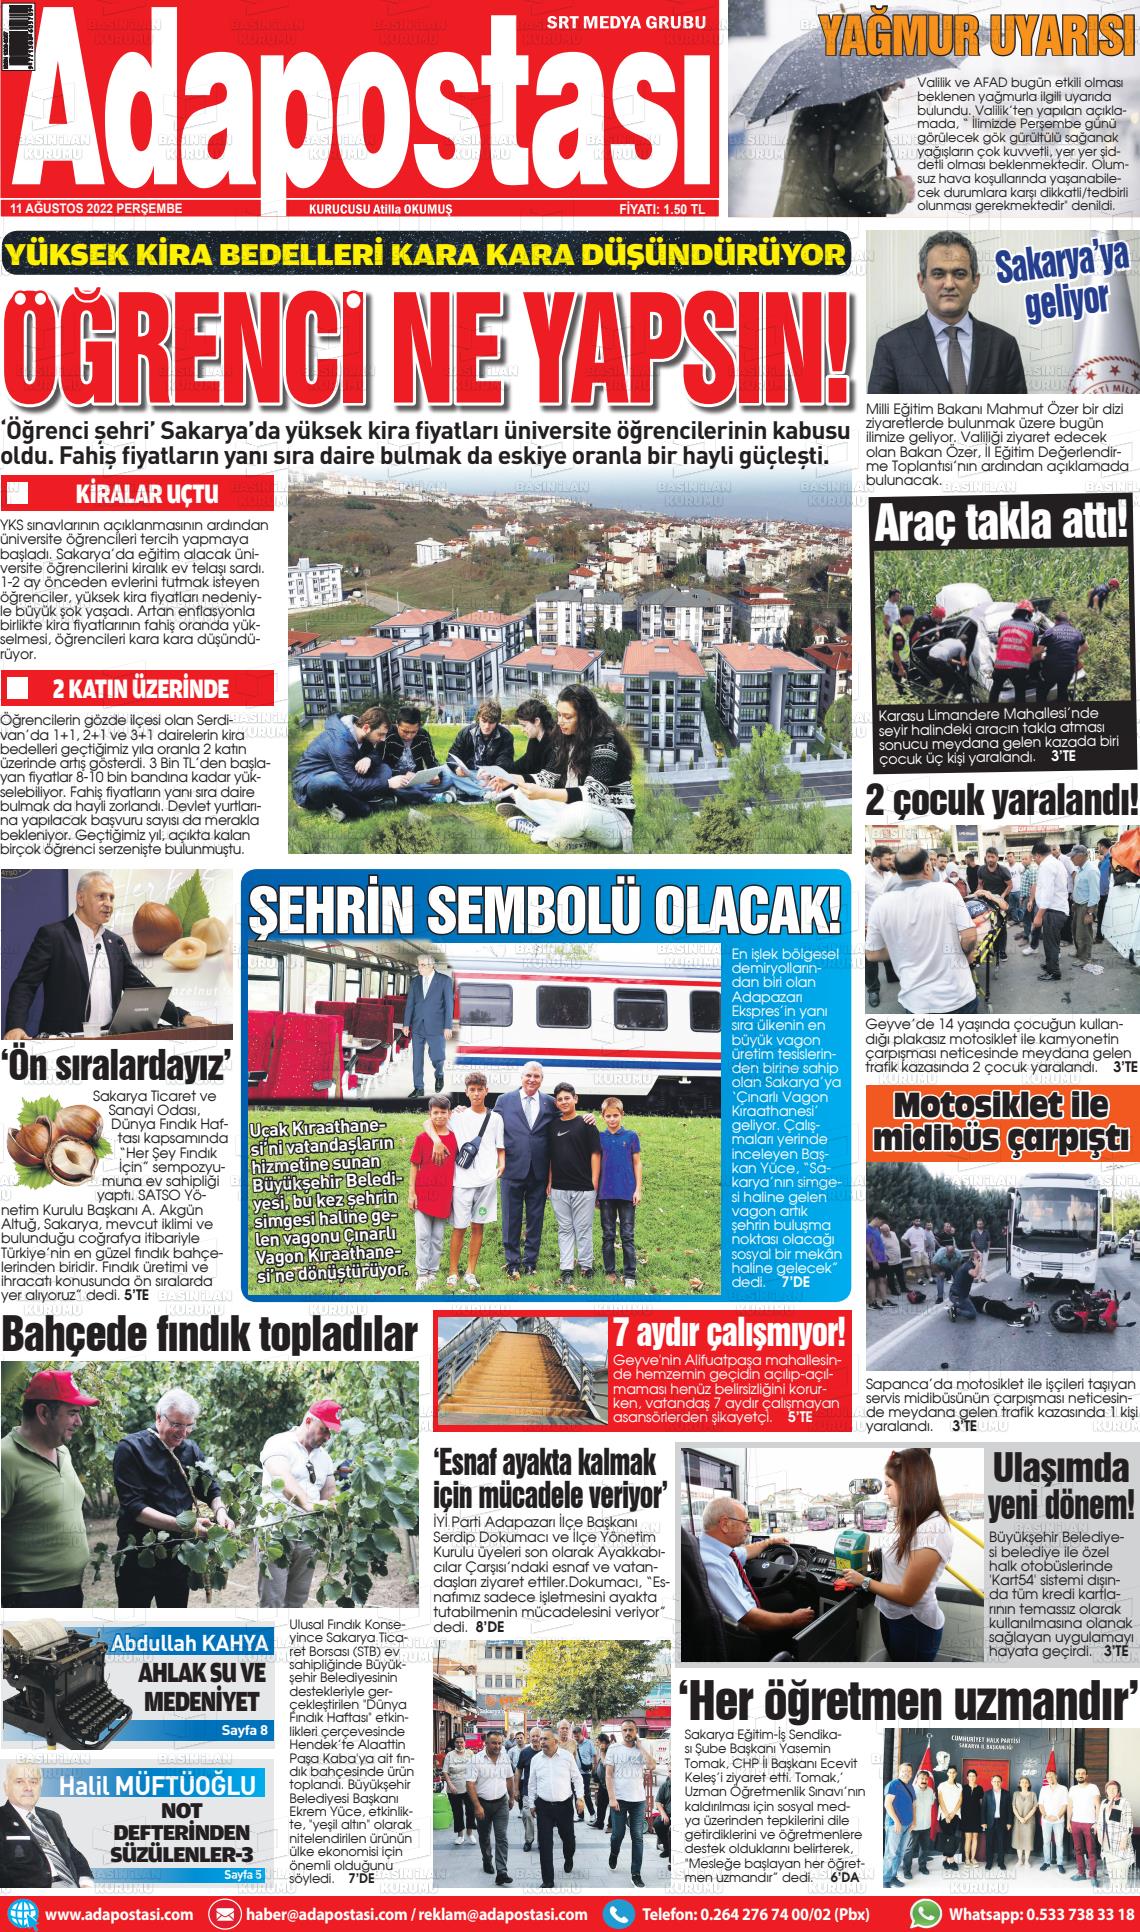 11 Ağustos 2022 Ada Postası Gazete Manşeti